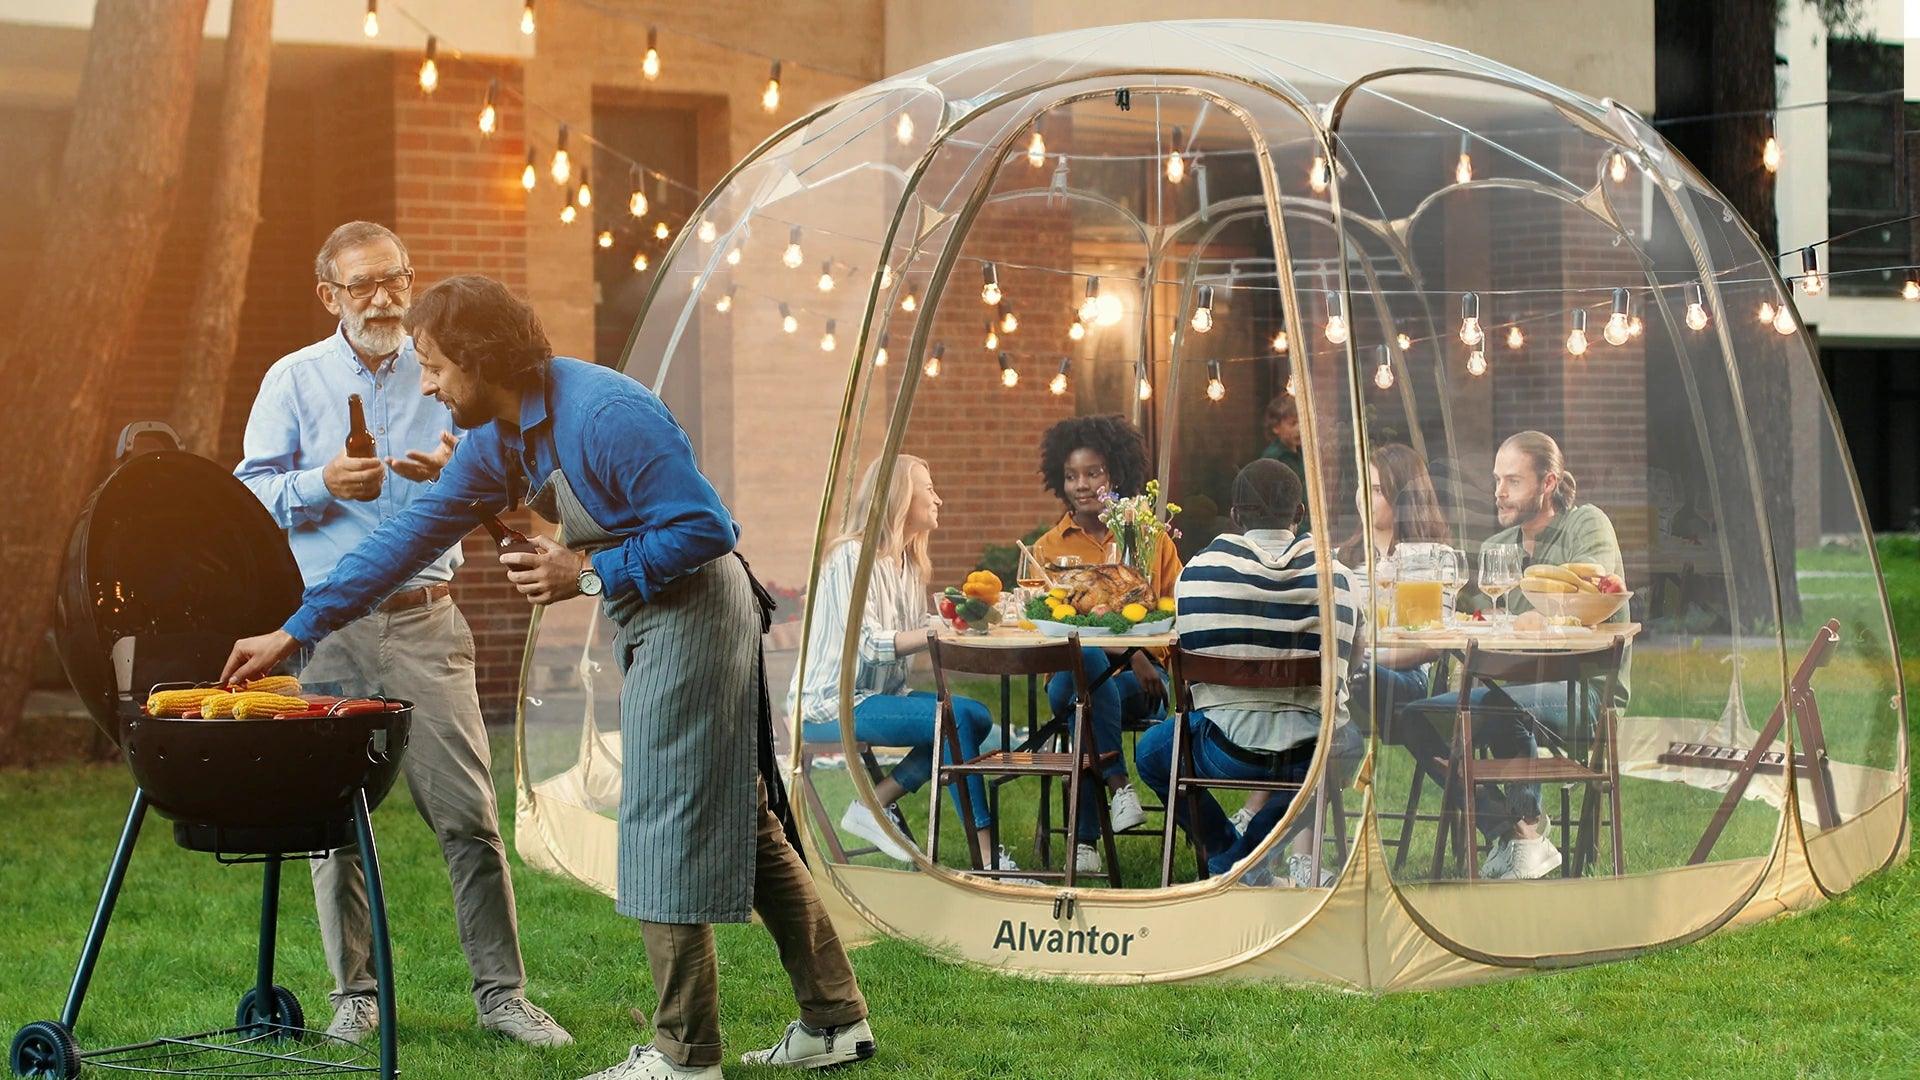 How to Set Up Alvantor Bubble Tent